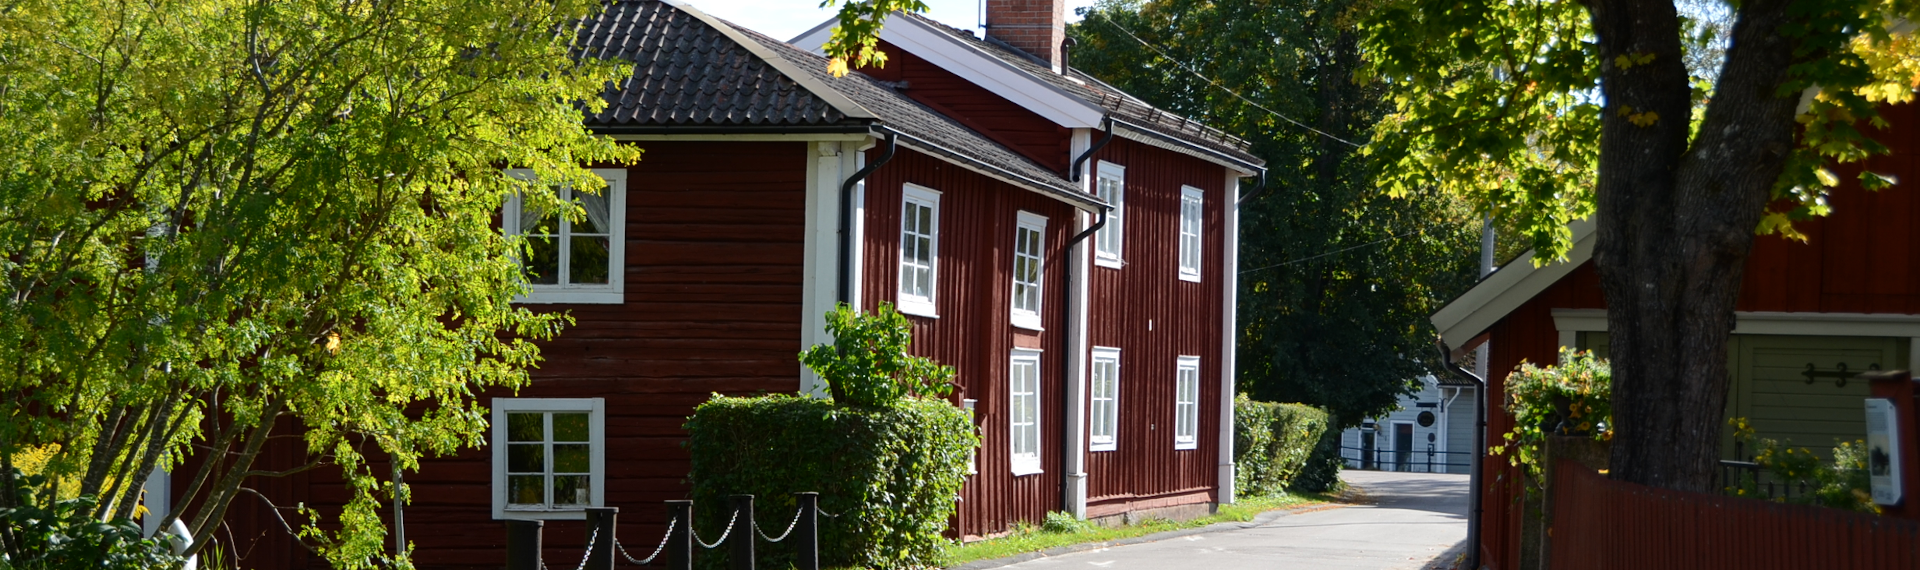 Norberg röda hus